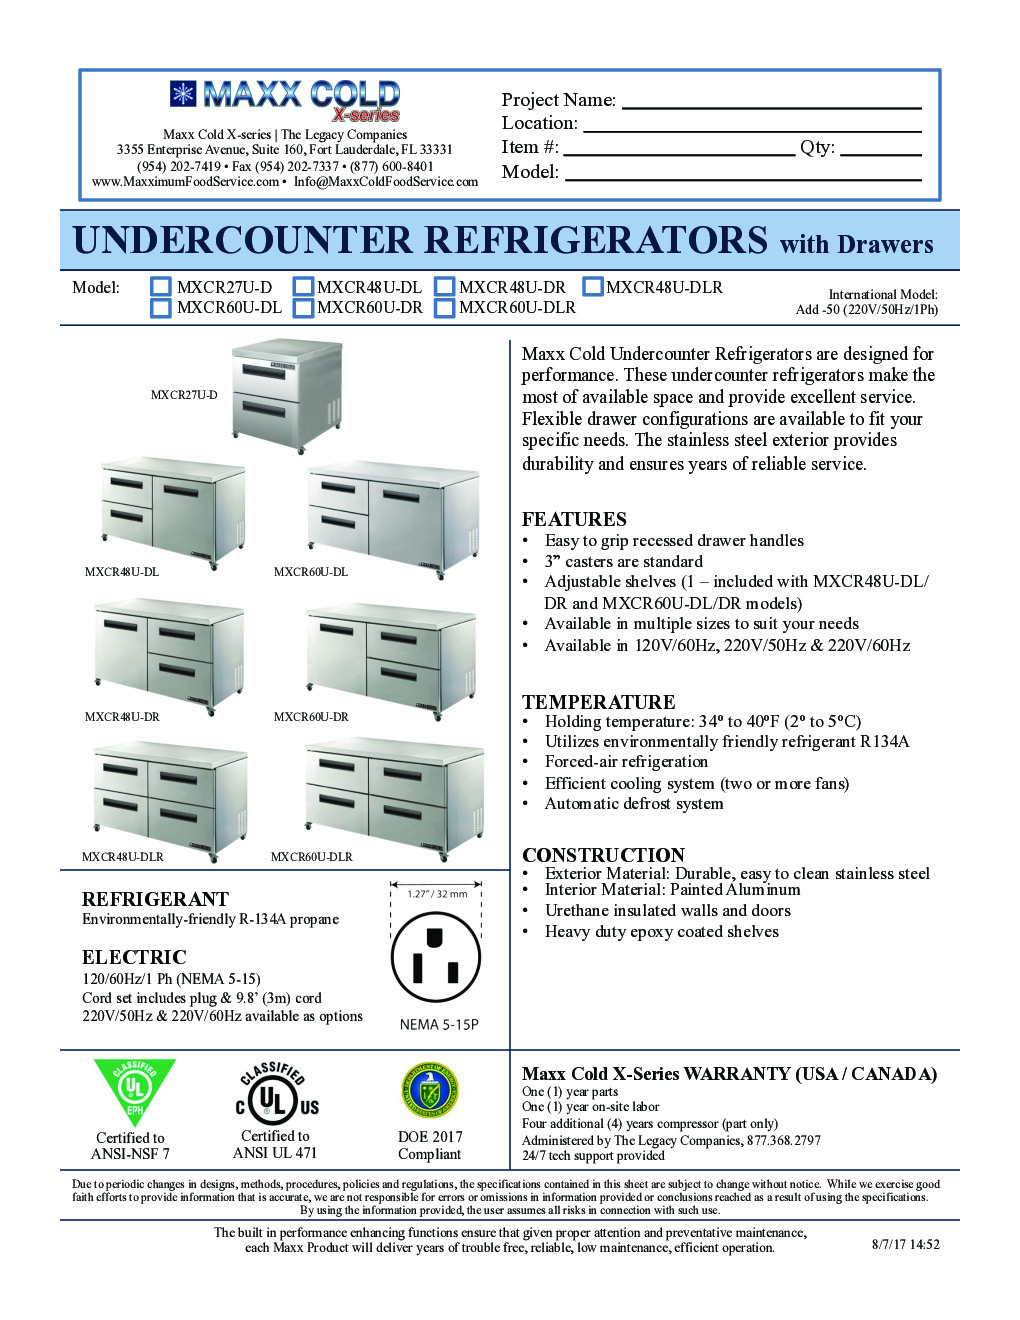 Maxximum MXCR48U-DL Reach-In Undercounter Refrigerator